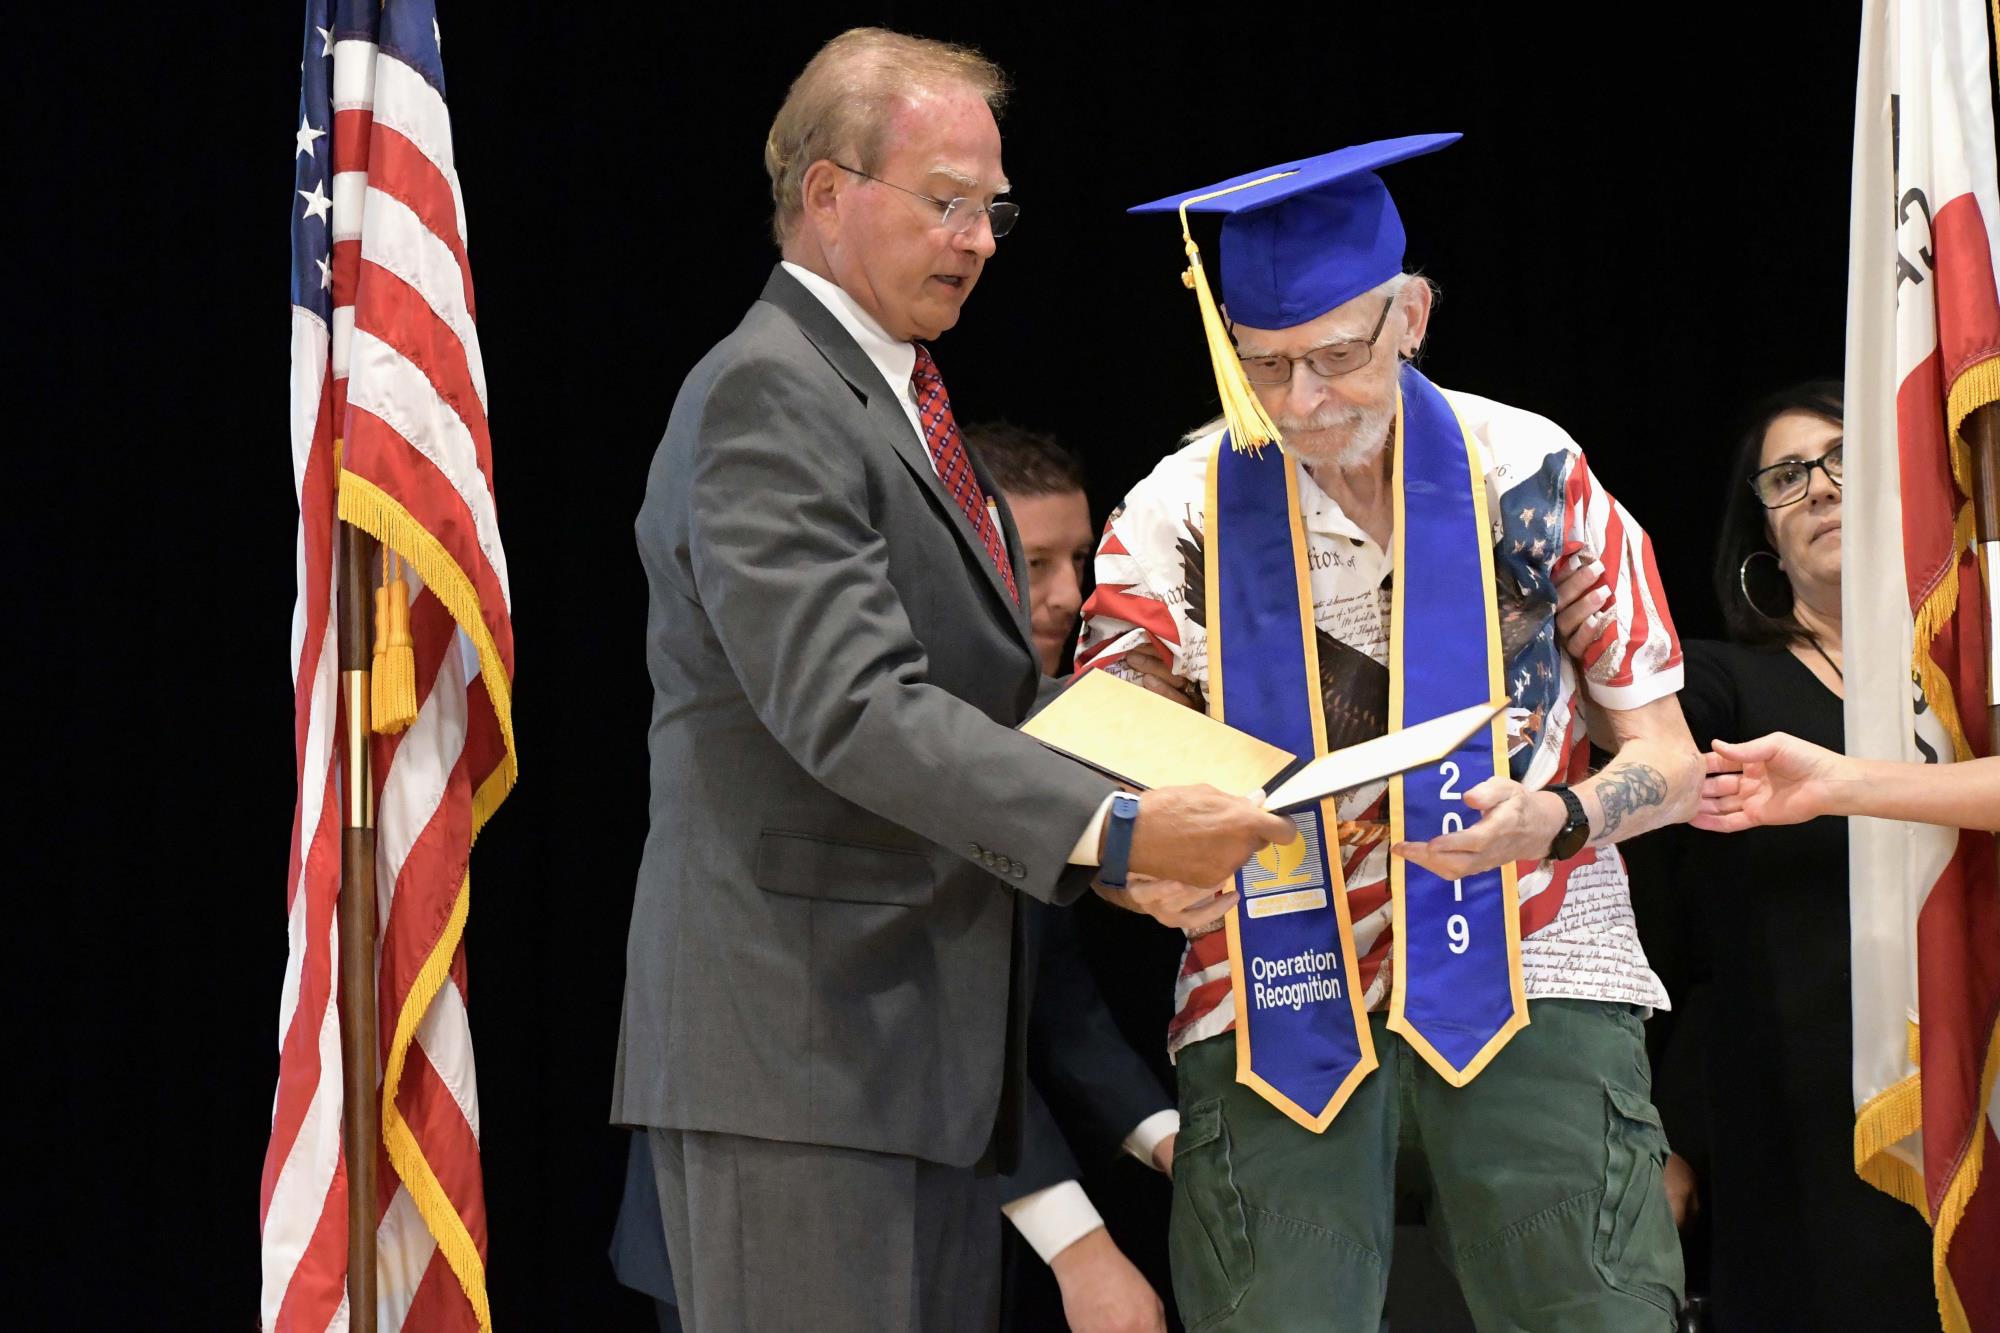 Franklin Stevens receives his diploma